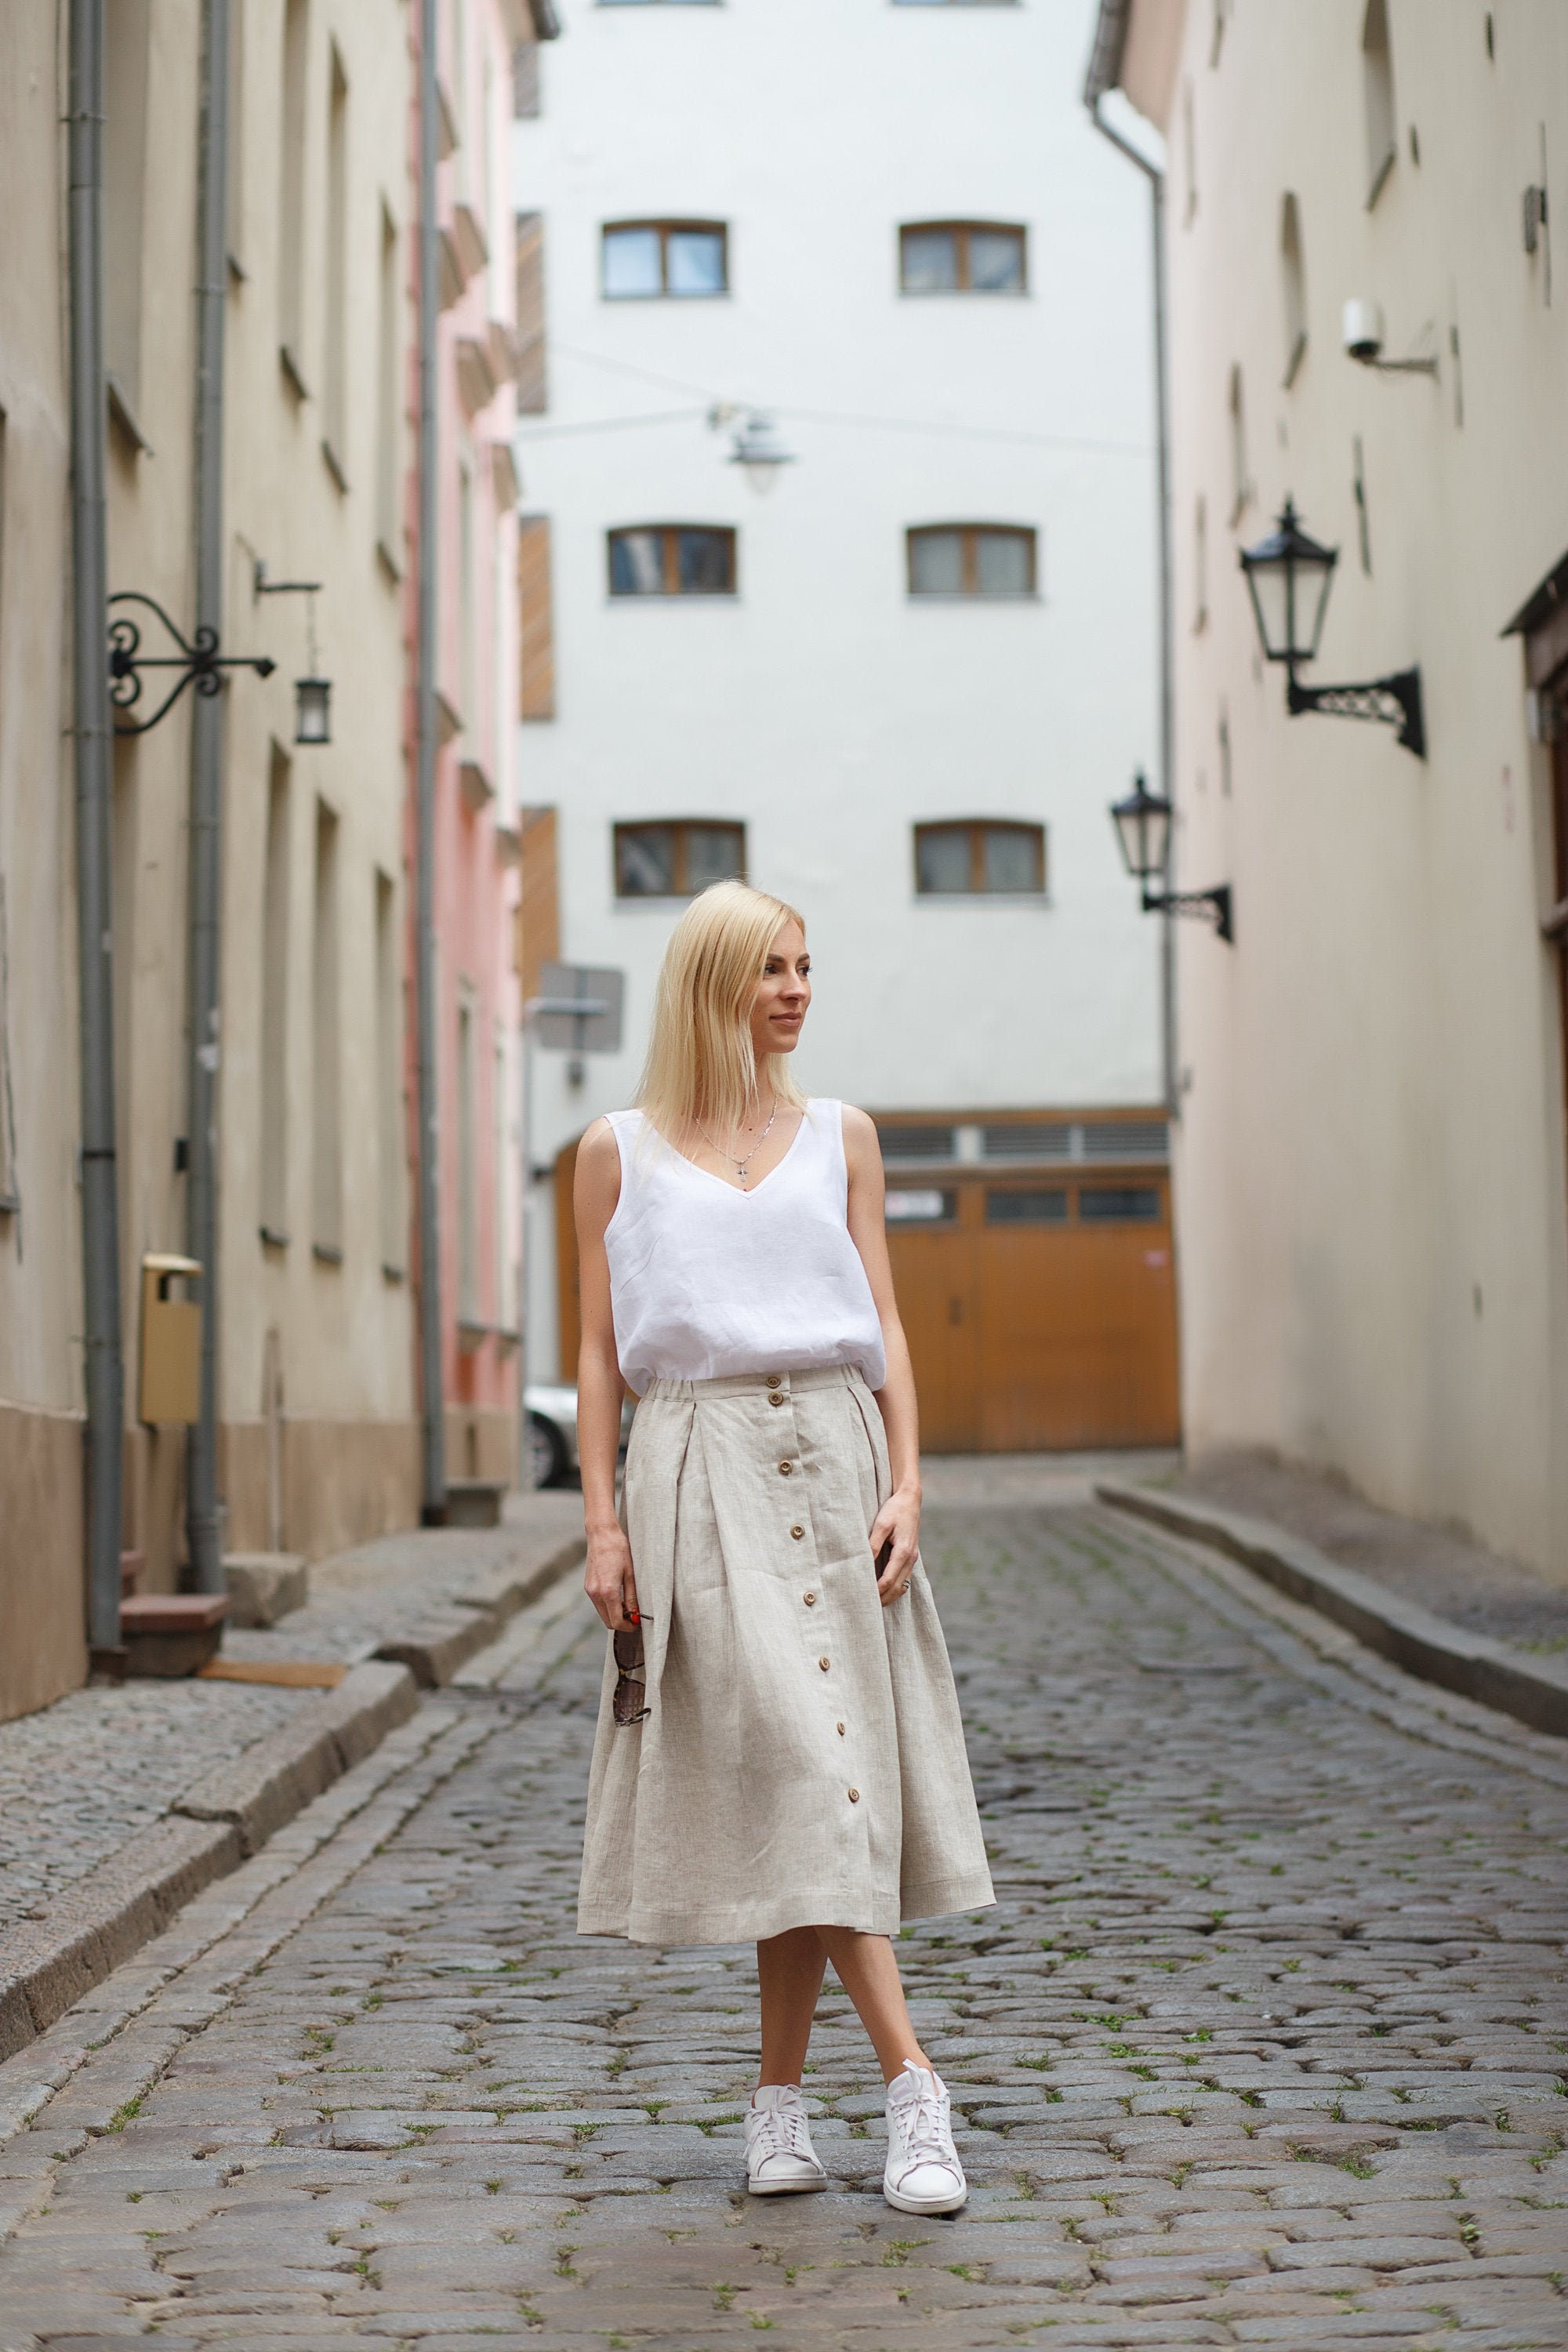 Beige linen skirt MALAGA II Midi length skirt with pockets A | Etsy